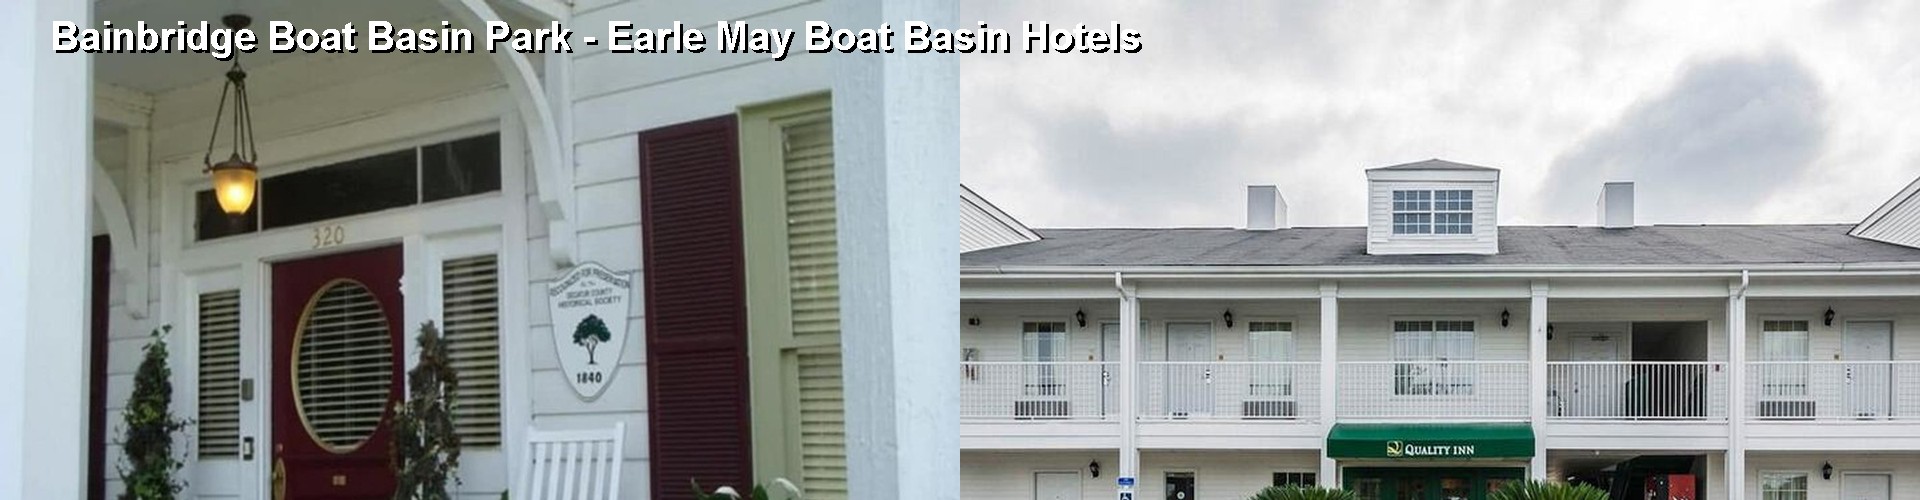 4 Best Hotels near Bainbridge Boat Basin Park - Earle May Boat Basin